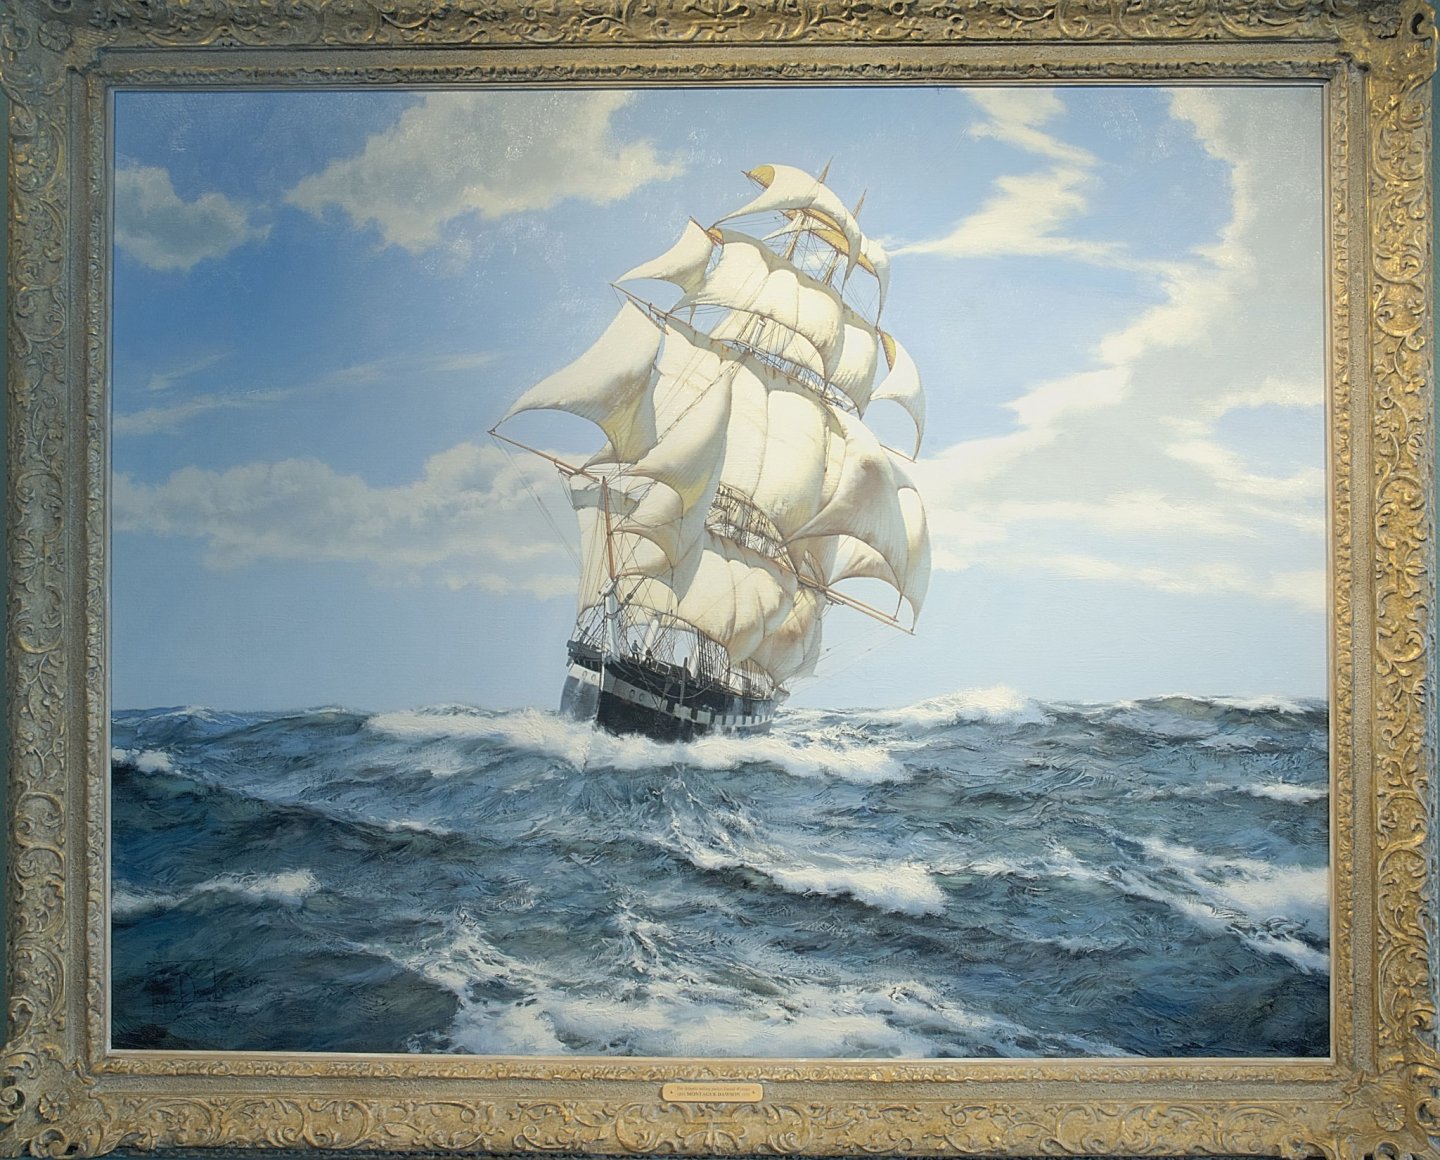 33Montague Dawson 'The Atlantic sailing packet Daniel Webster'.jpg